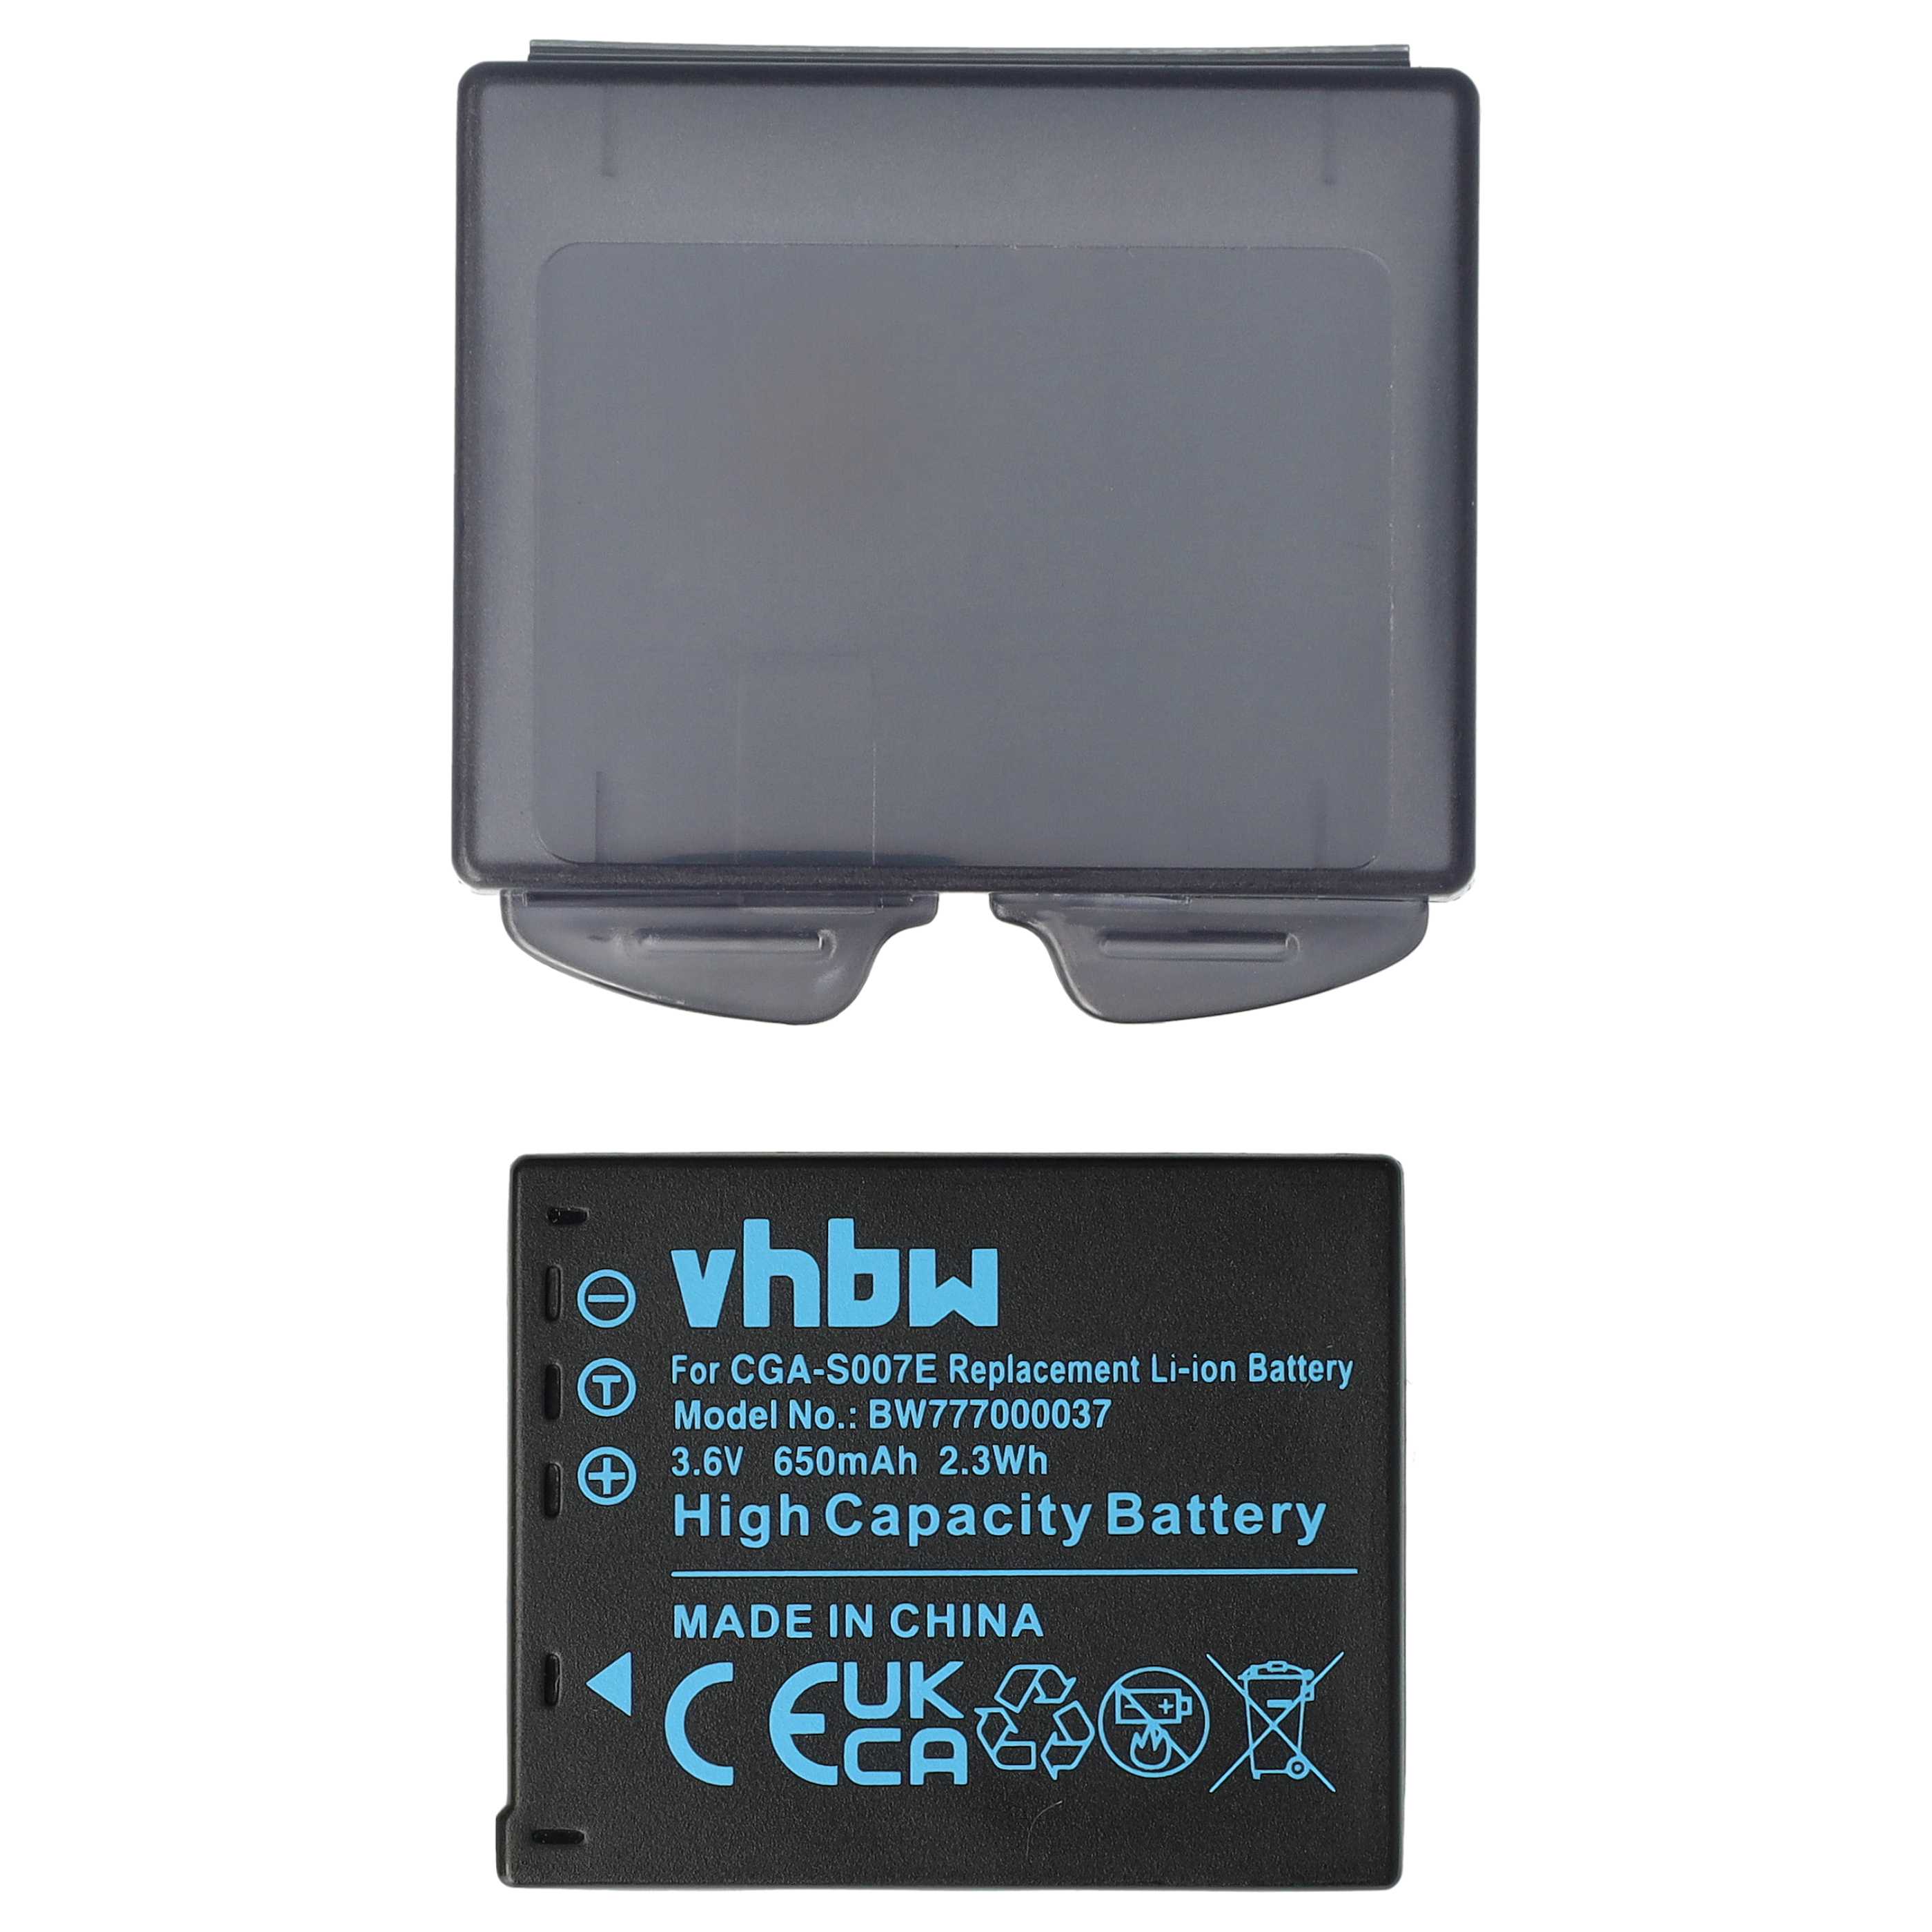 Battery Replacement for Panasonic CGA-S007A/B, CGA-S007E, CGA-S007, CGA-S007A/1B - 650mAh, 3.6V, Li-Ion